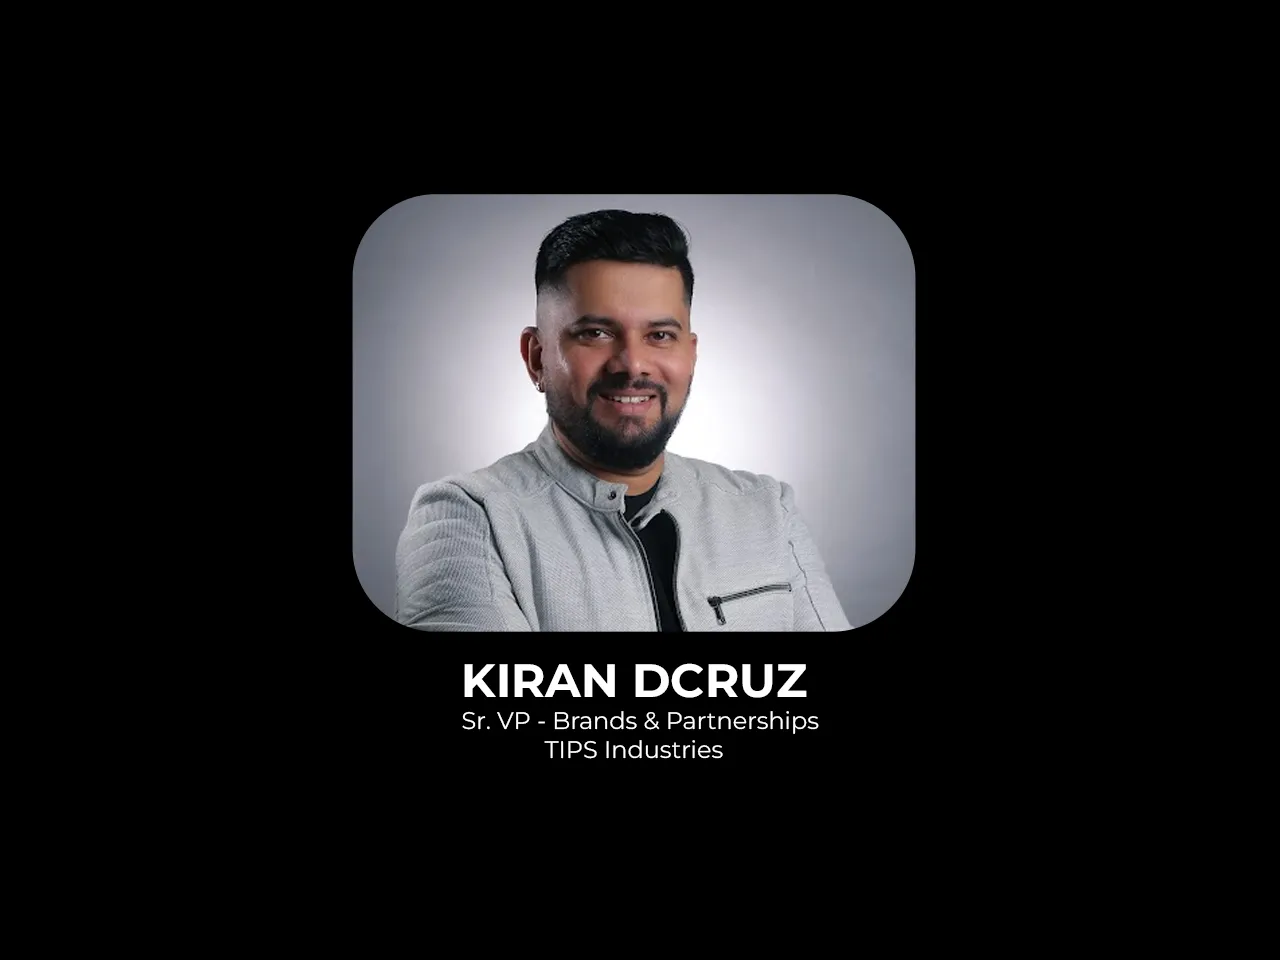 TIPS onboards Kiran Dcruz as Sr. VP of Brands & Partnerships